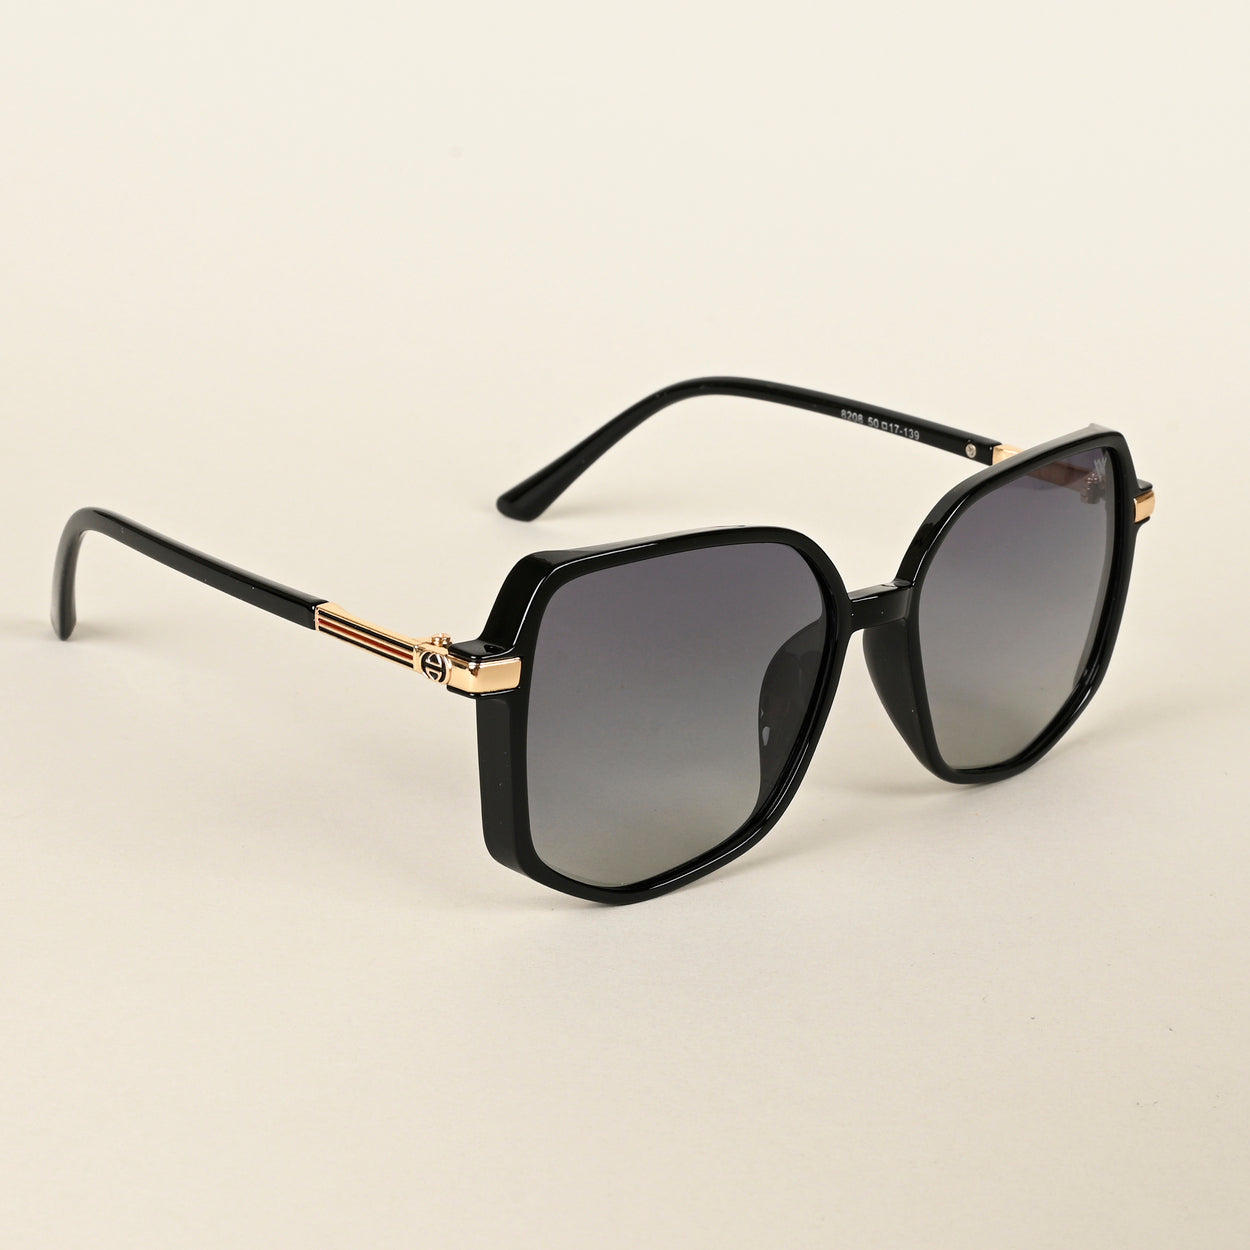 Voyage Black Square Polarized Sunglasses for Women - PMG4249